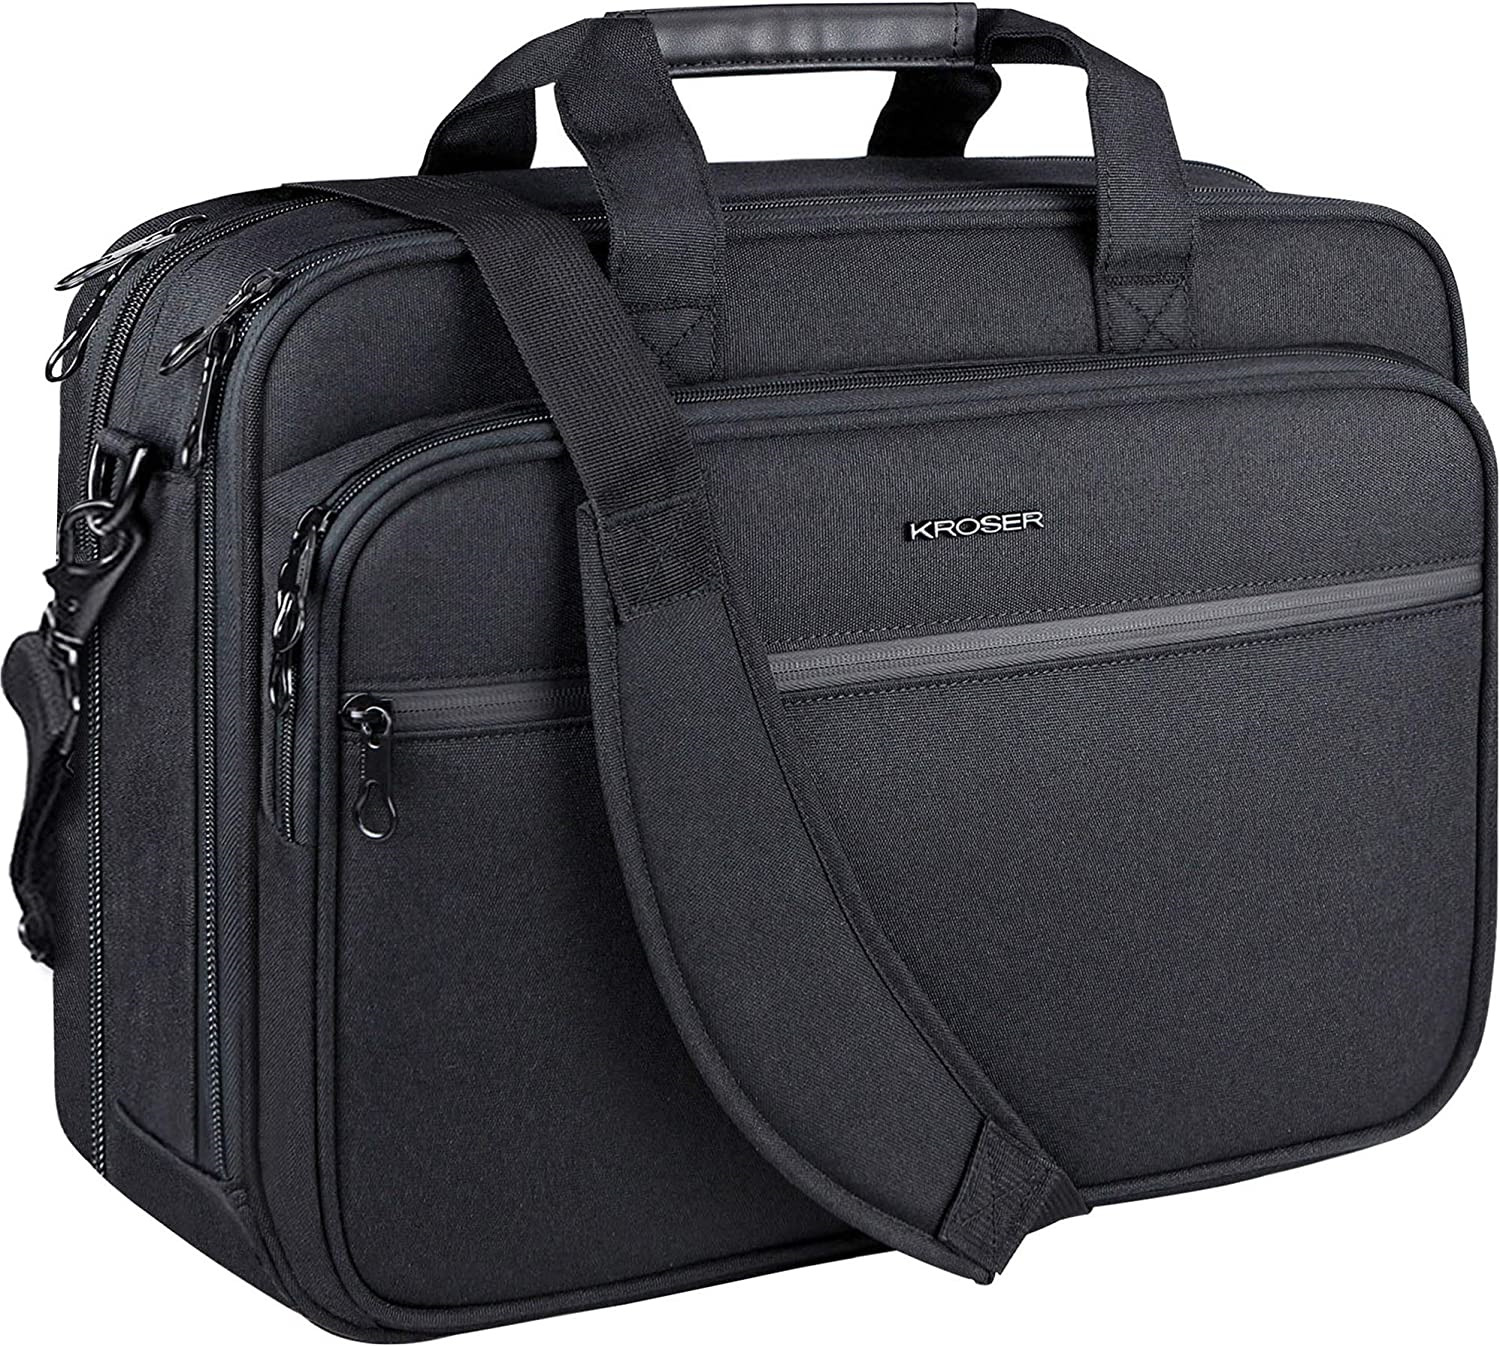 KROSER 18 Laptop Bag Premium Laptop Briefcase Fits Up to 17.3 Inch Laptop Bag